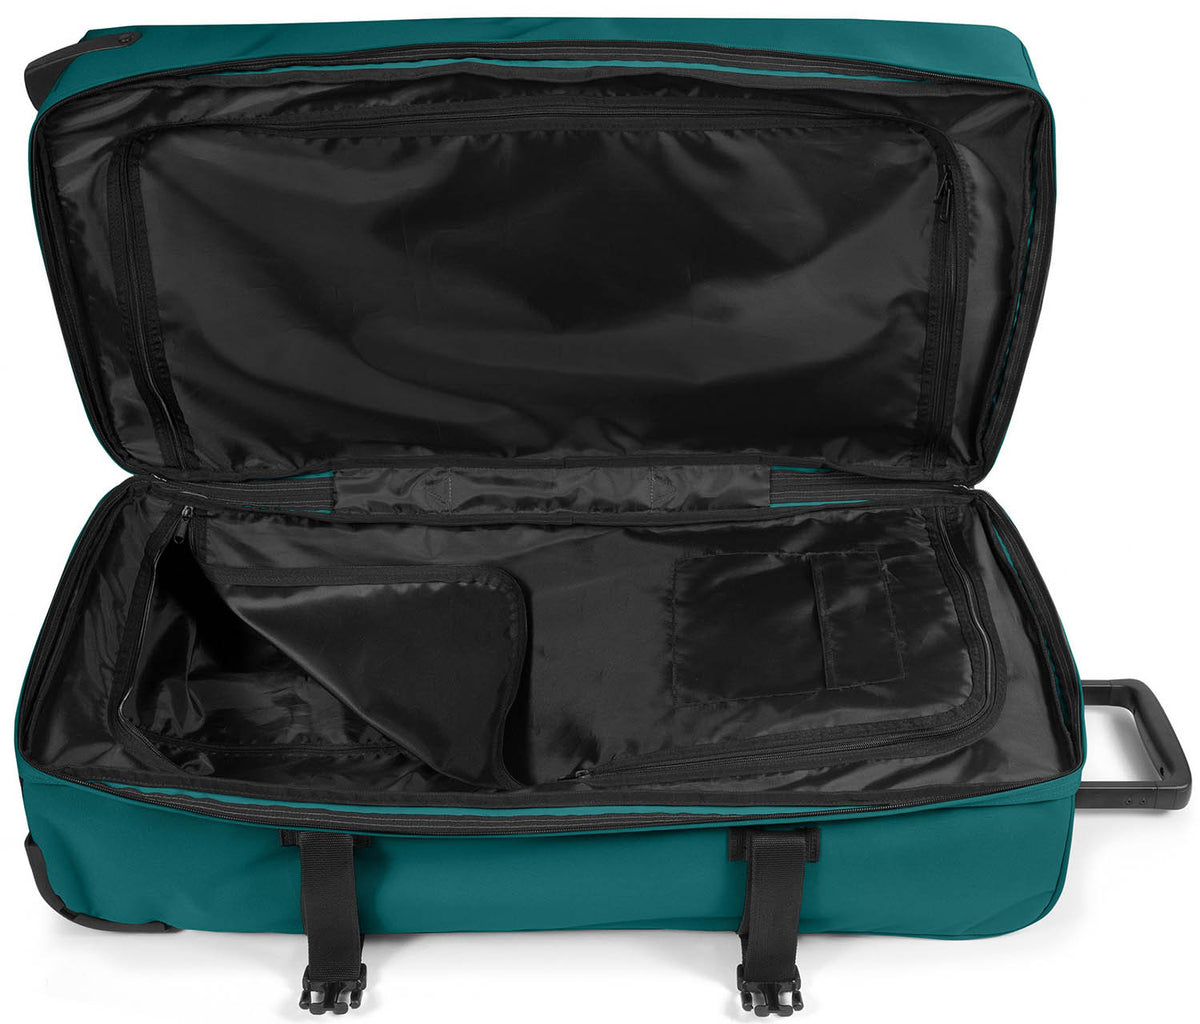 Eastpak Tranverz L Suitcase - Peacock Green